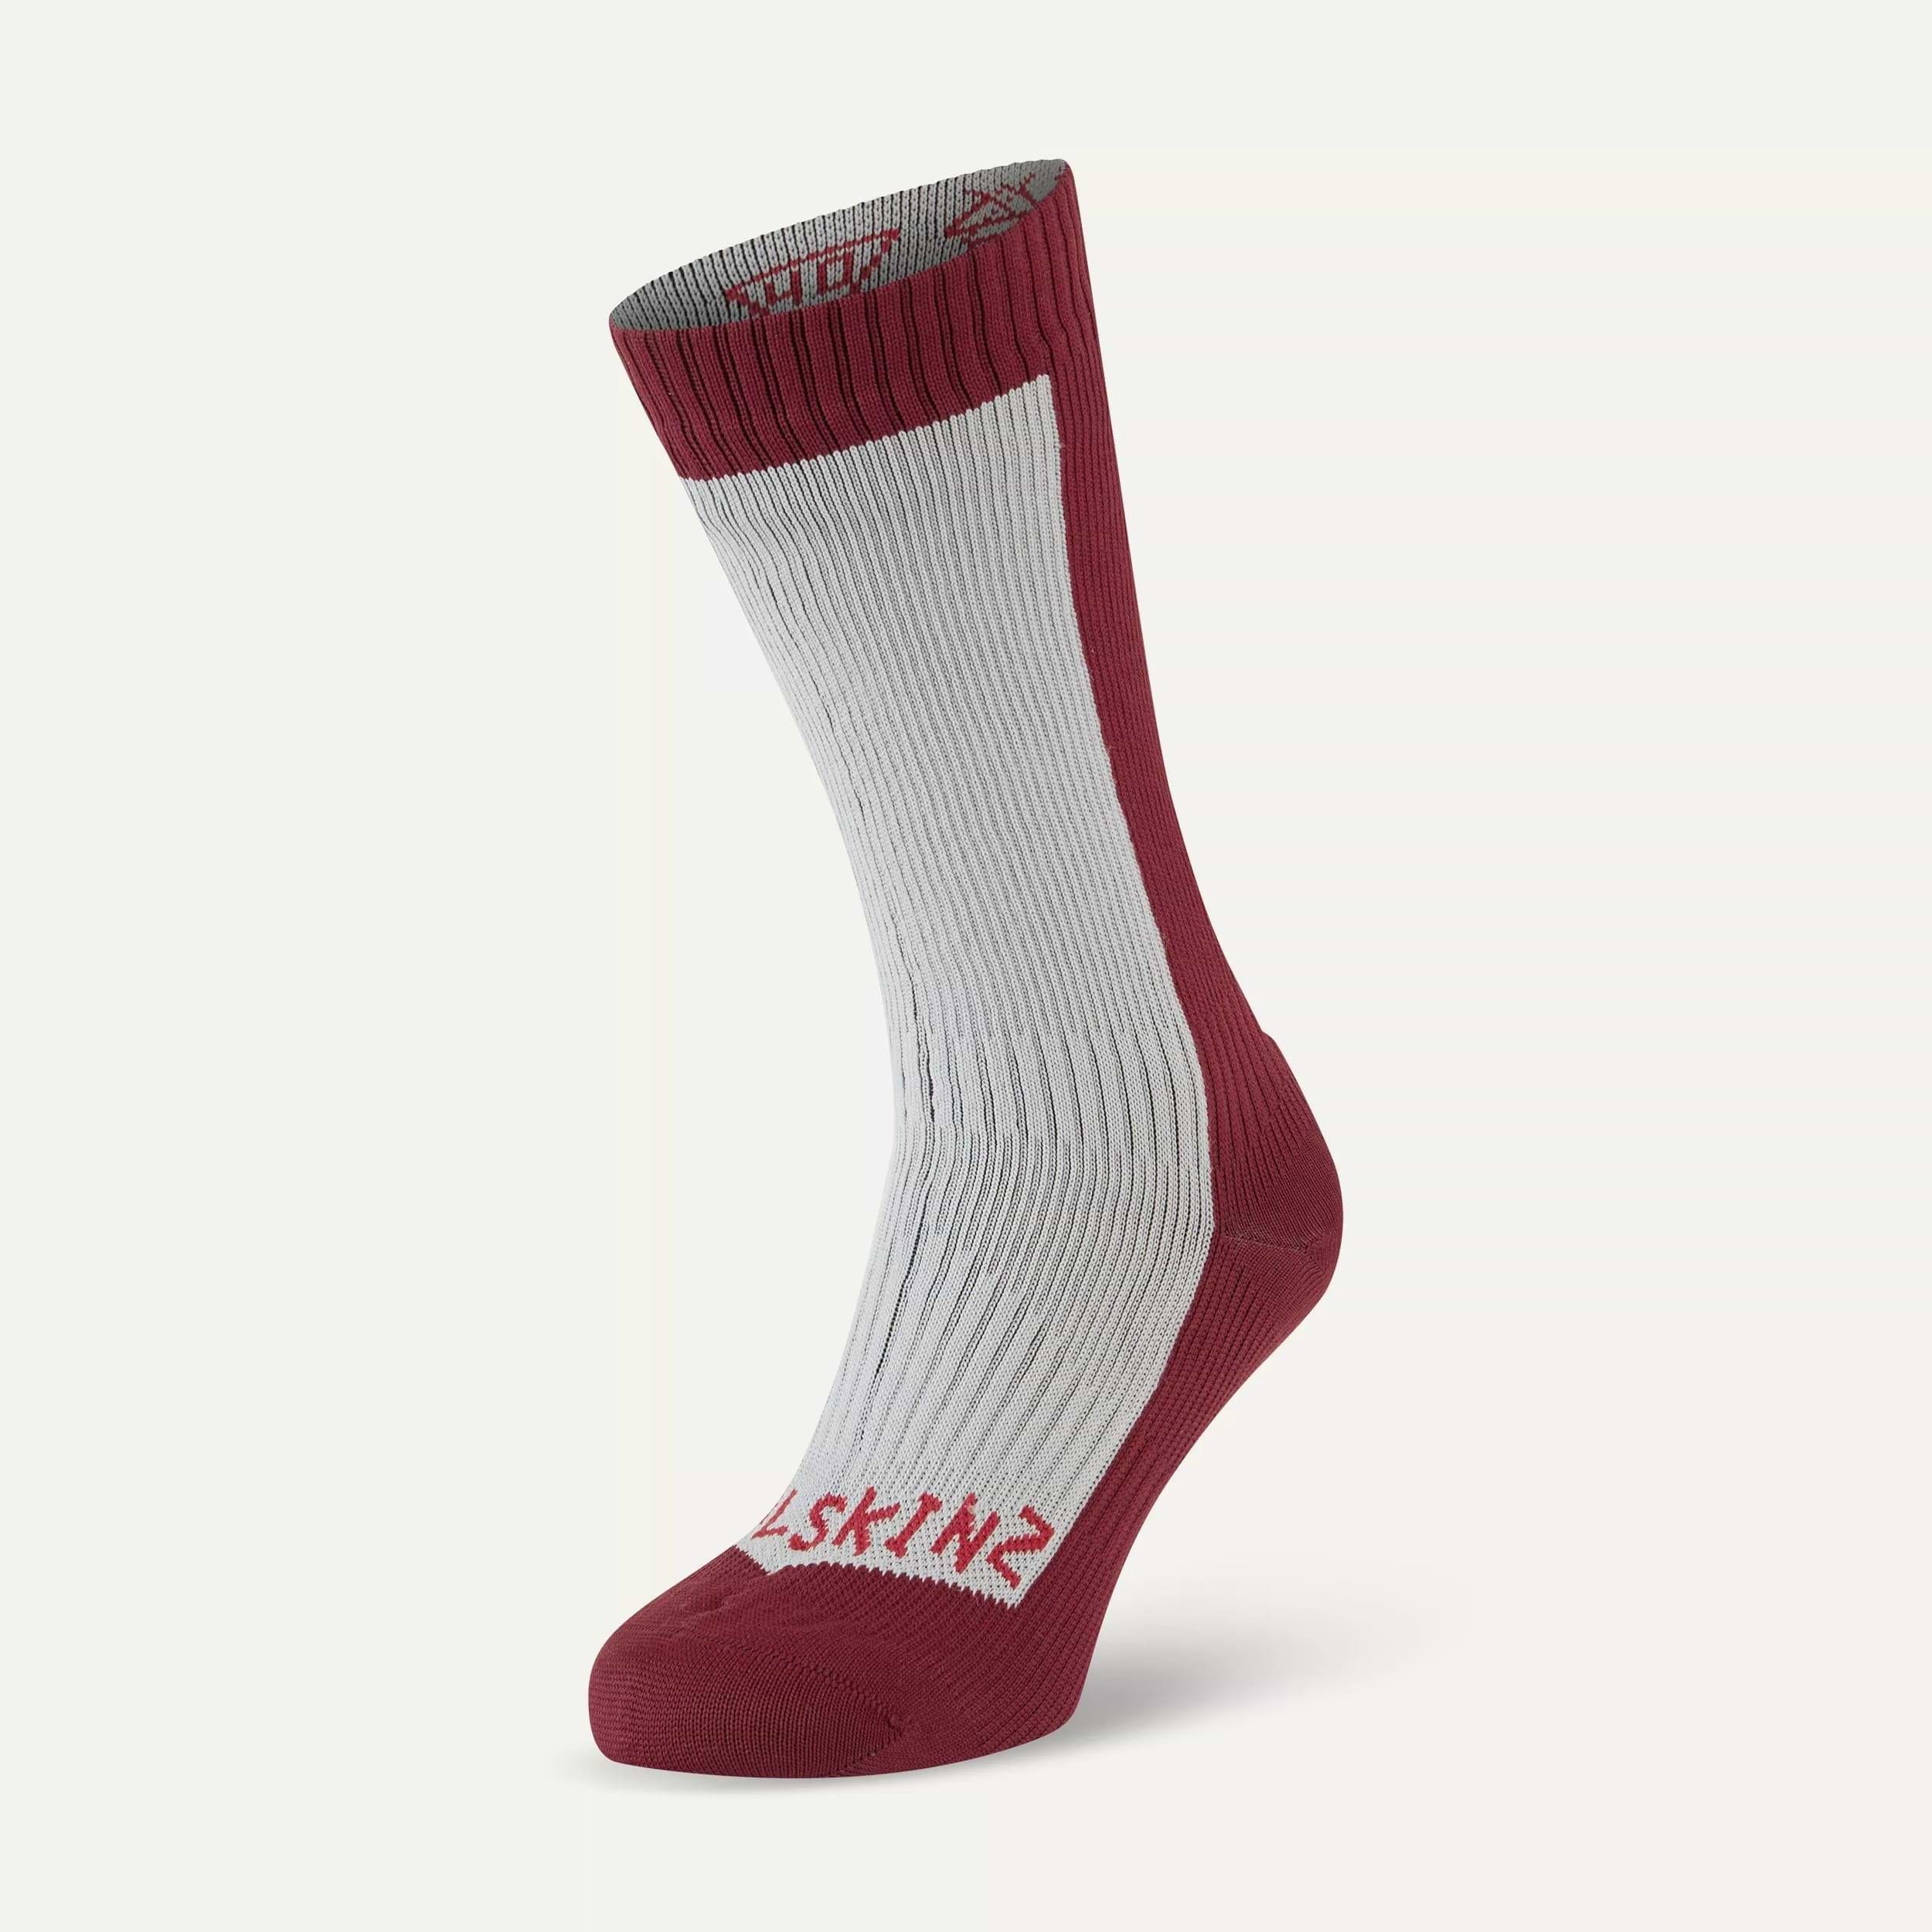 Stripe Knee-High Socks, Best Socks For Cycling In Winter